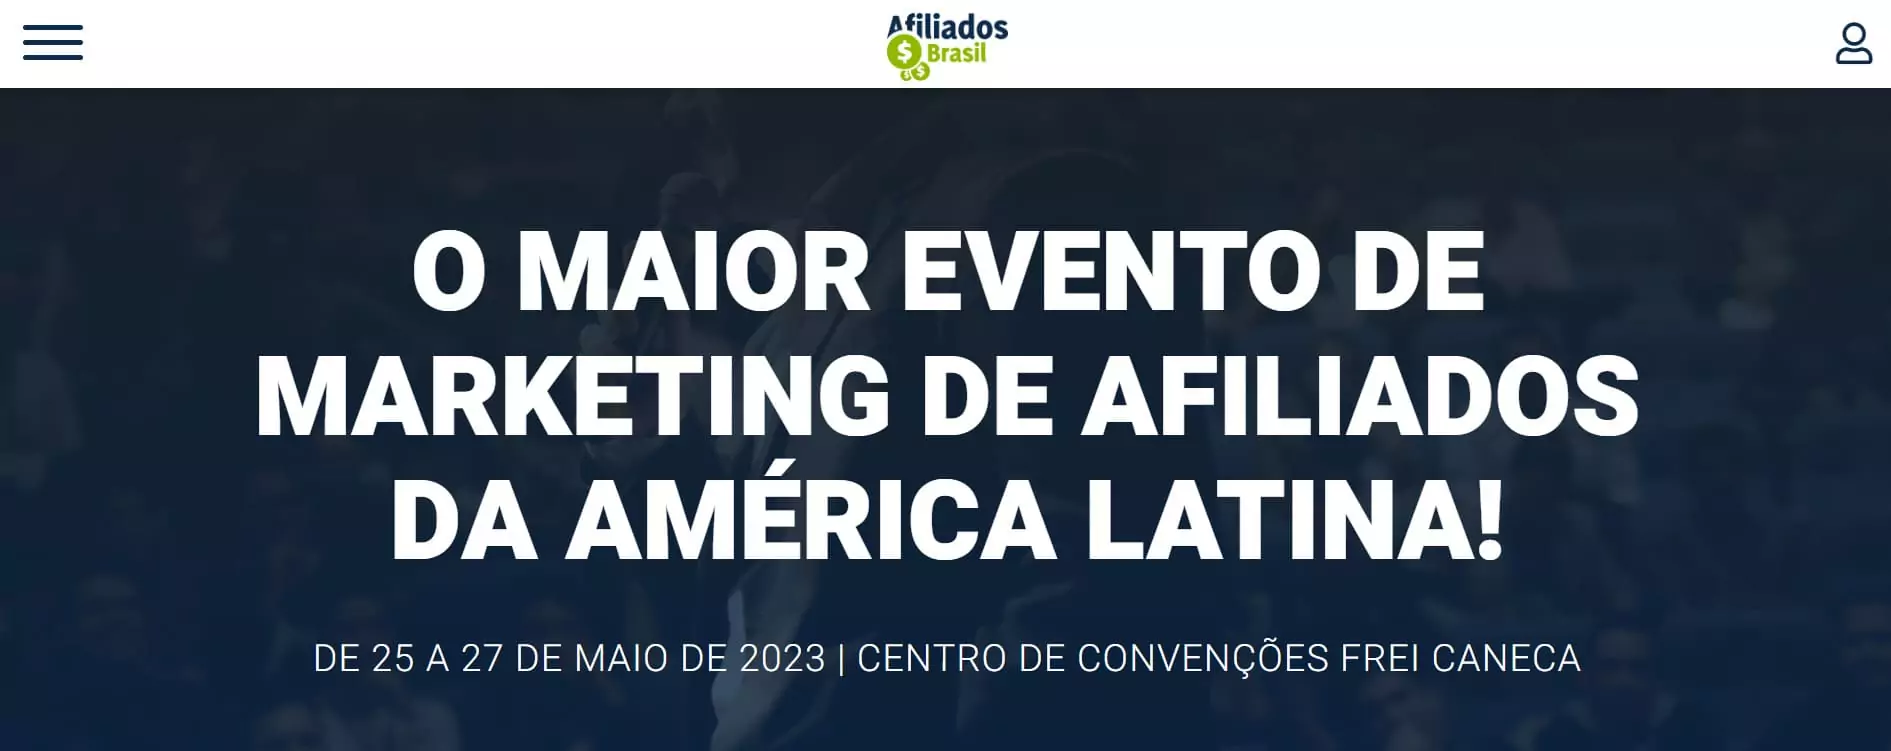 affiliate-summit-affiliate-marketing-events-in-2023-afiliados-brasil